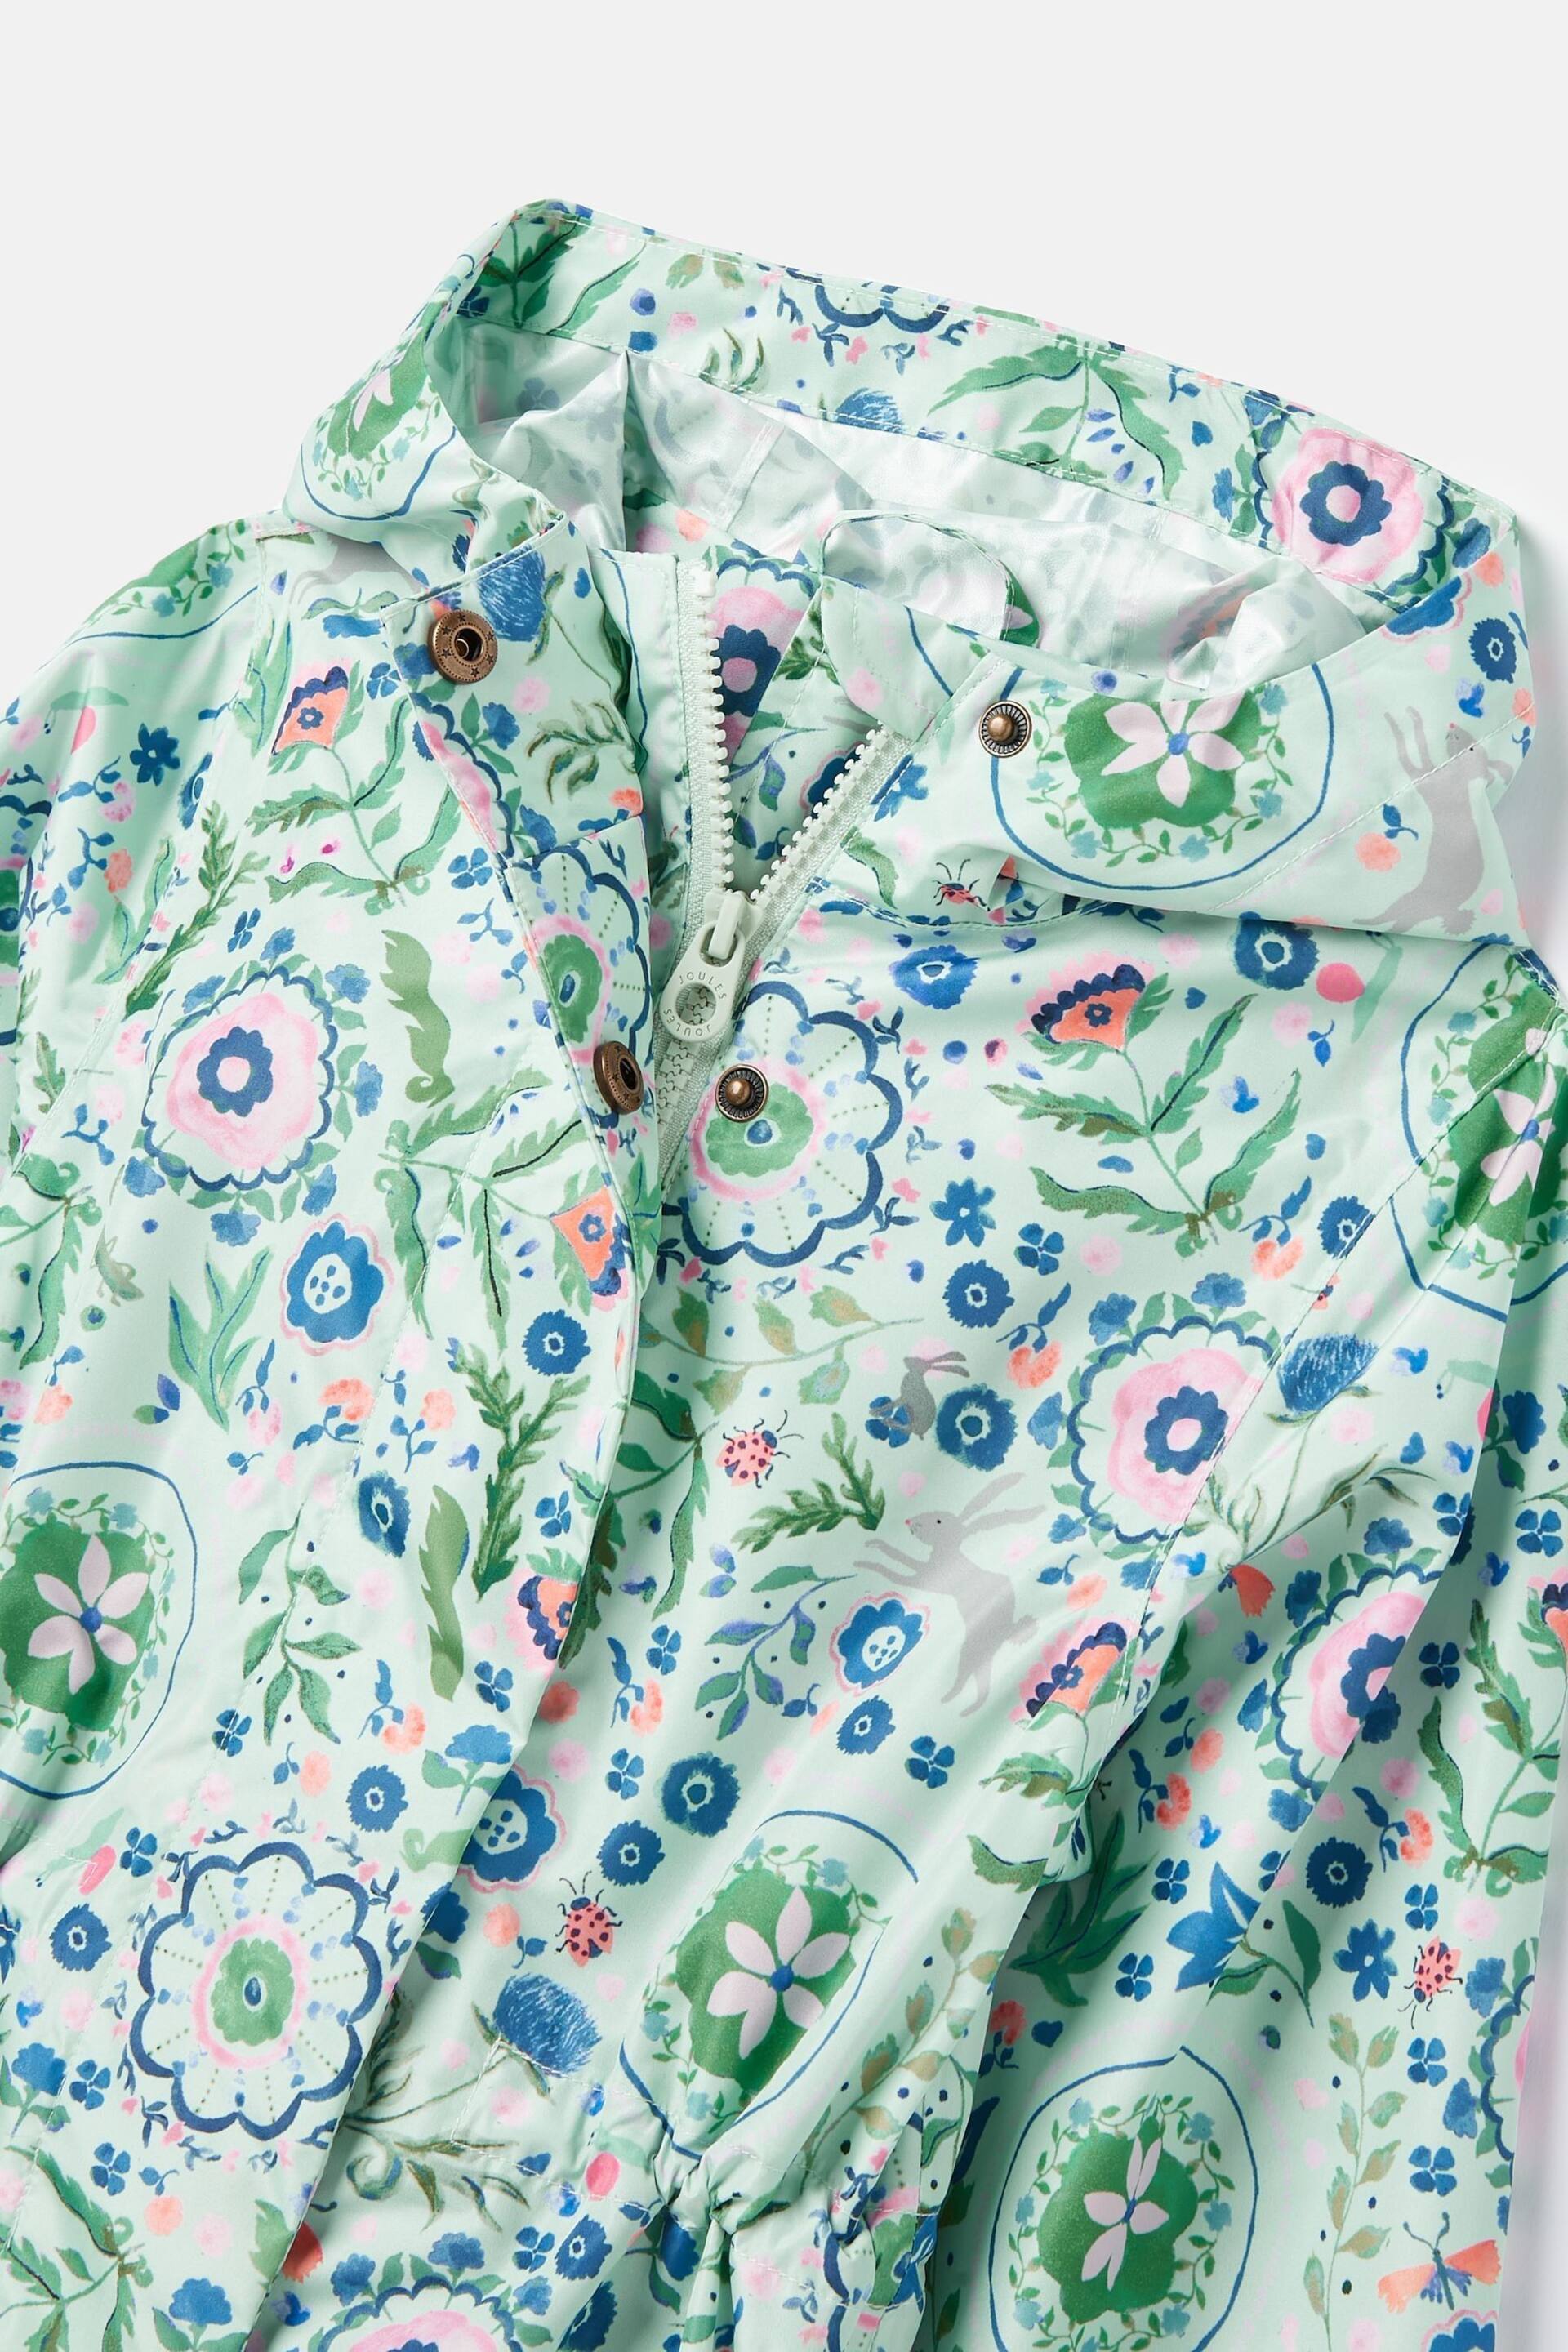 Joules Rainford Green Floral Waterproof Packable Raincoat With Hood - Image 3 of 8